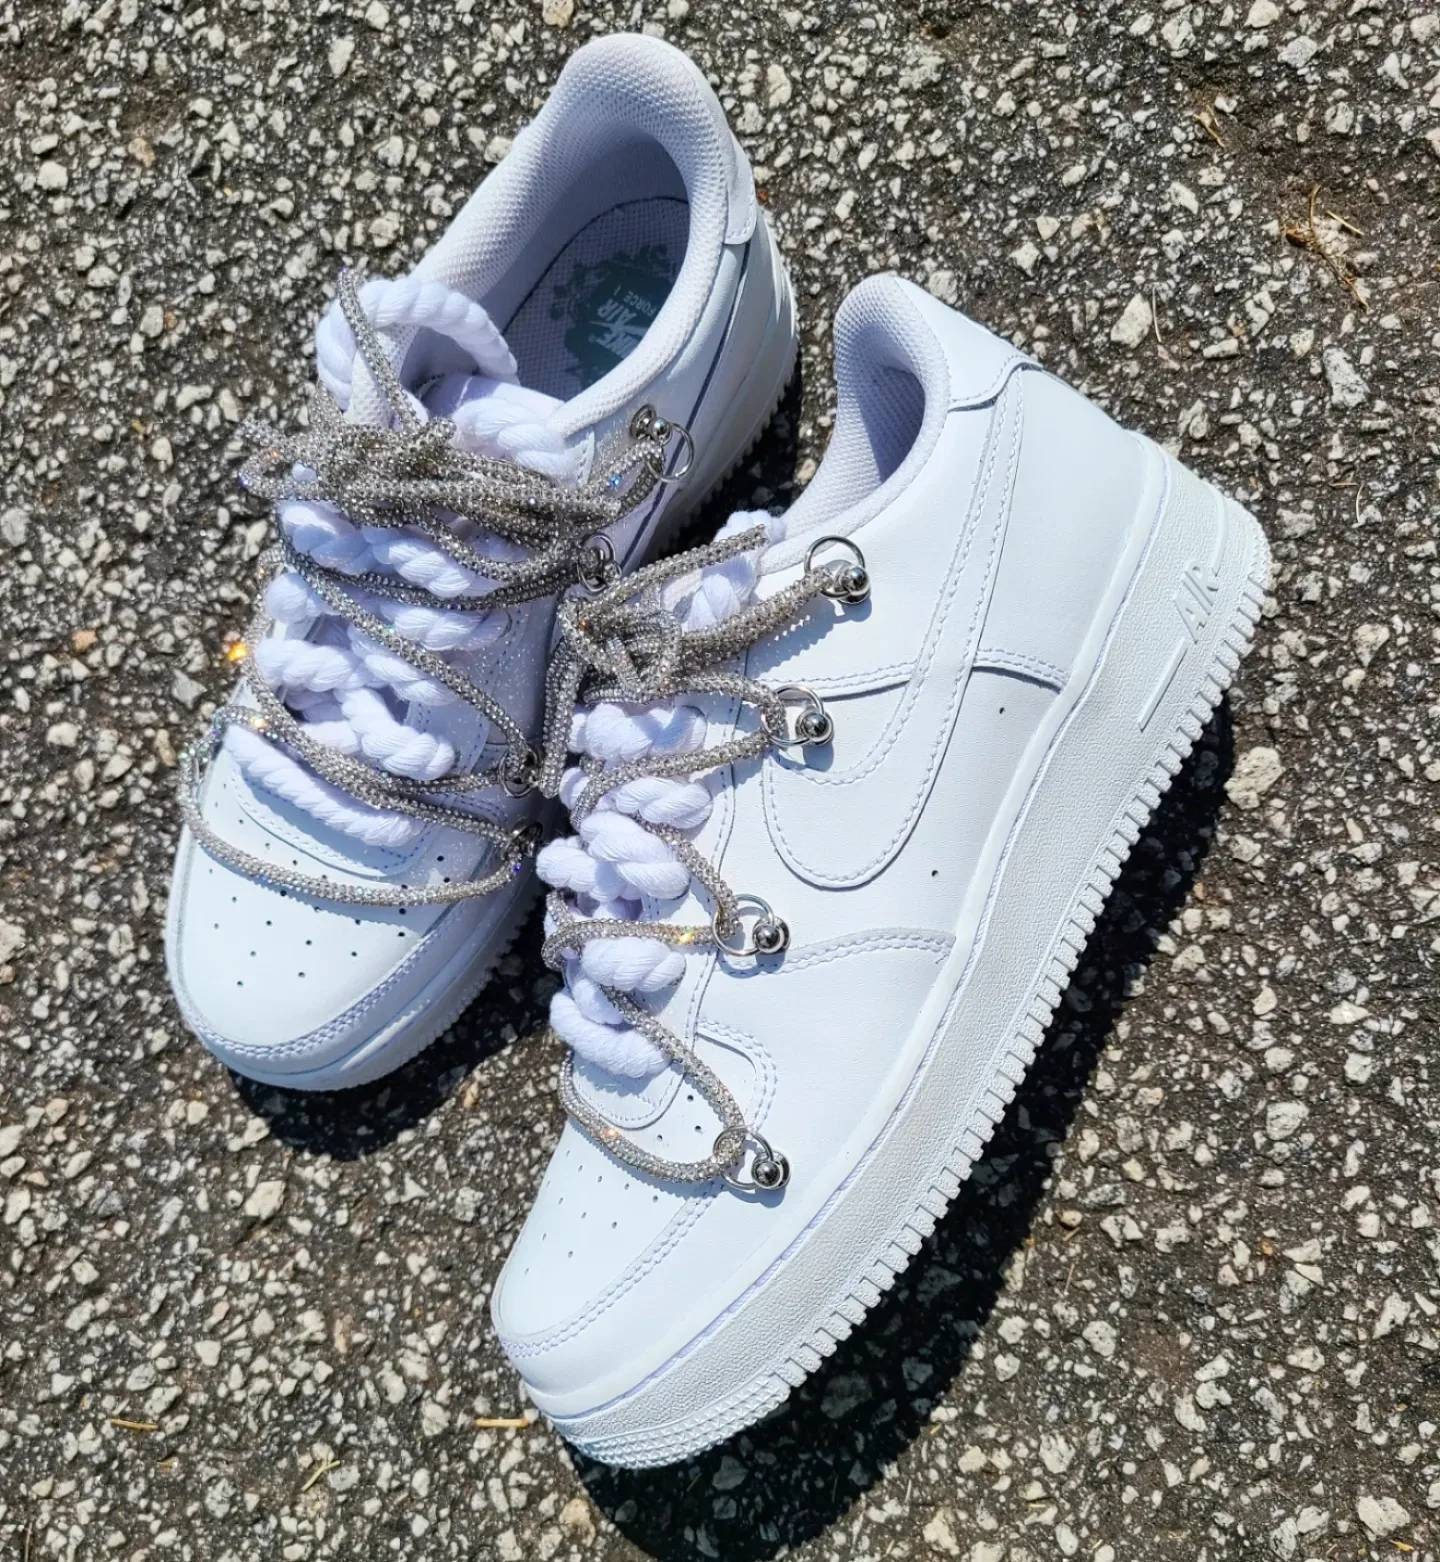 white air force 1 shoe laces